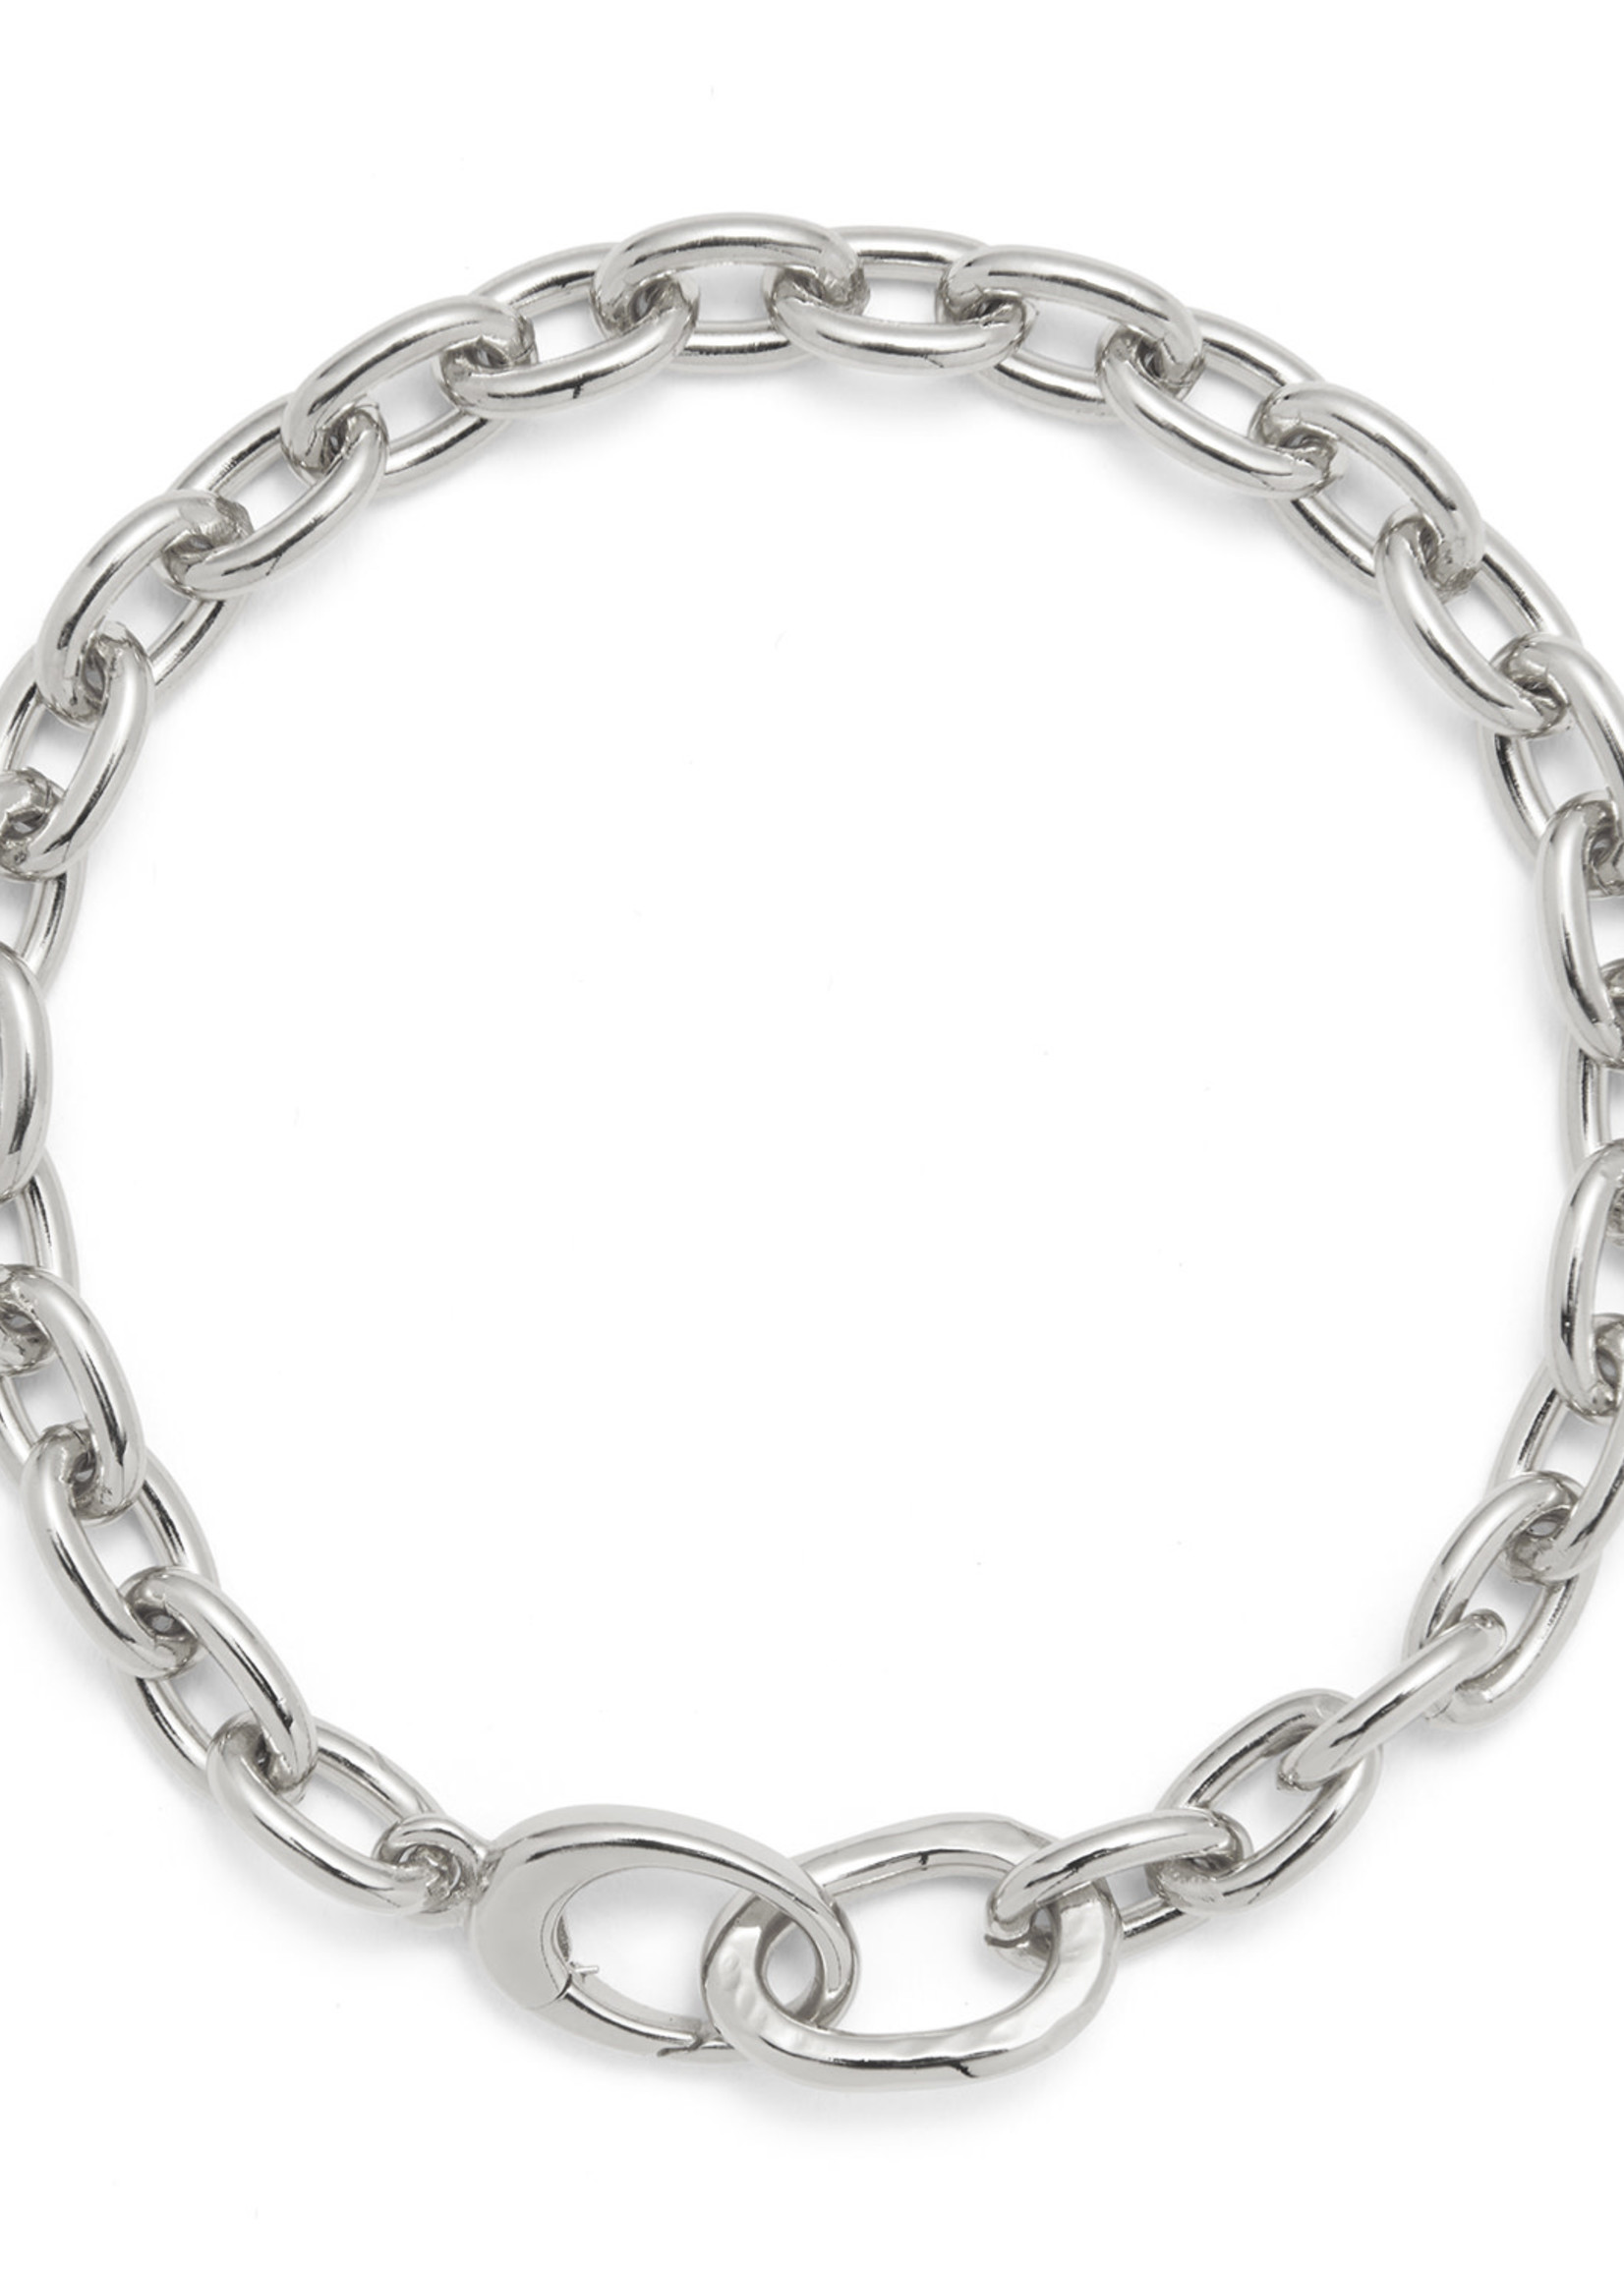 Lady Grey Loupe Bracelet in Silver